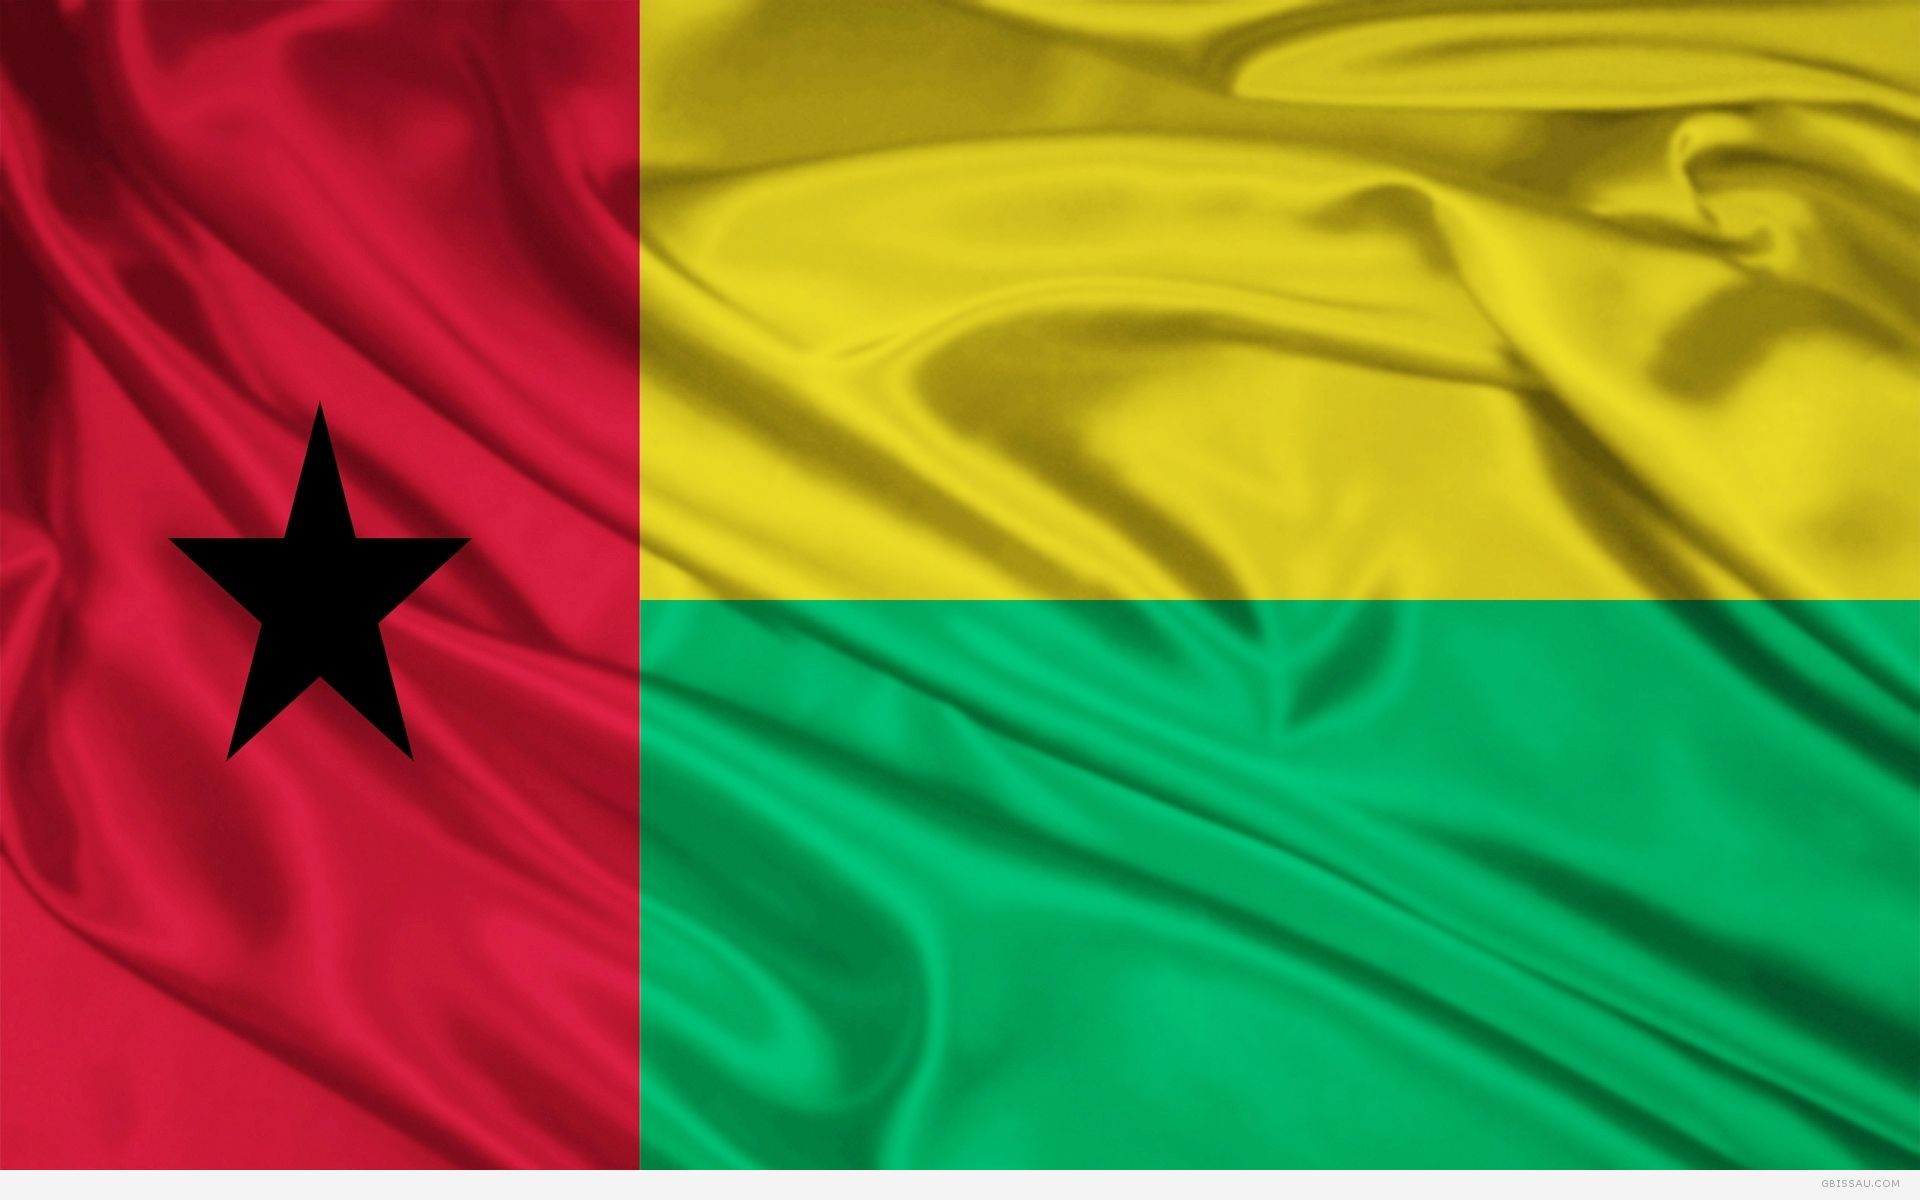 https://www.financenews24.com/wp-content/uploads/2013/06/15-guinea-bissau-flag-wallpaper.jpg